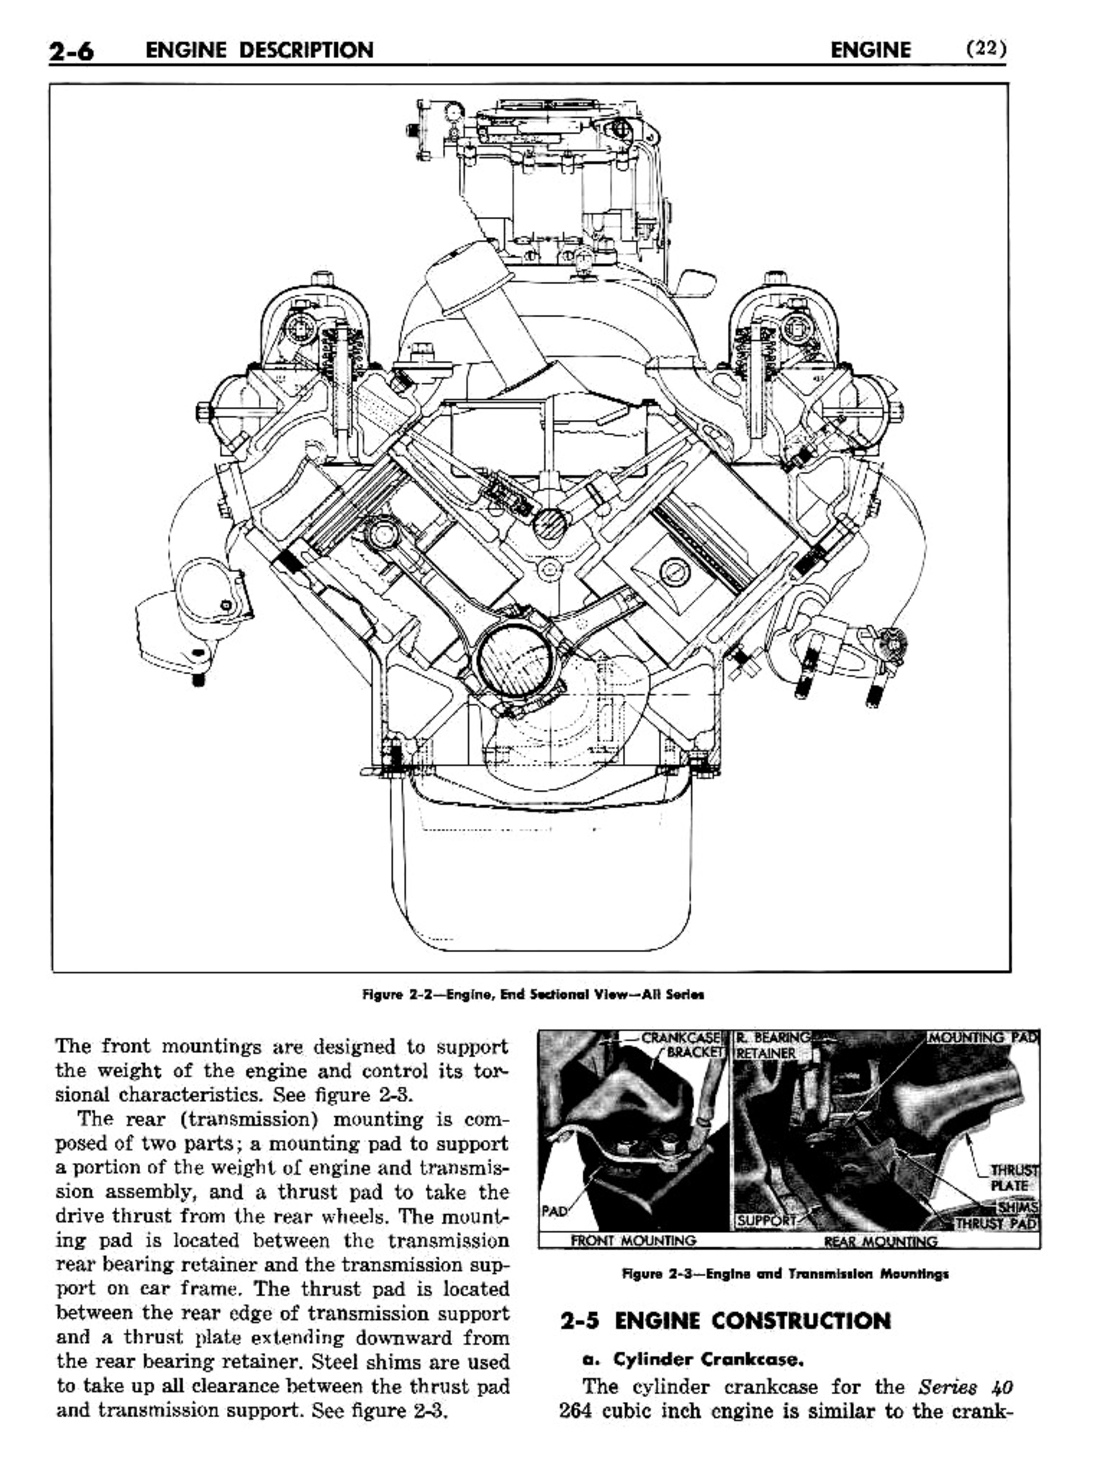 n_03 1954 Buick Shop Manual - Engine-006-006.jpg